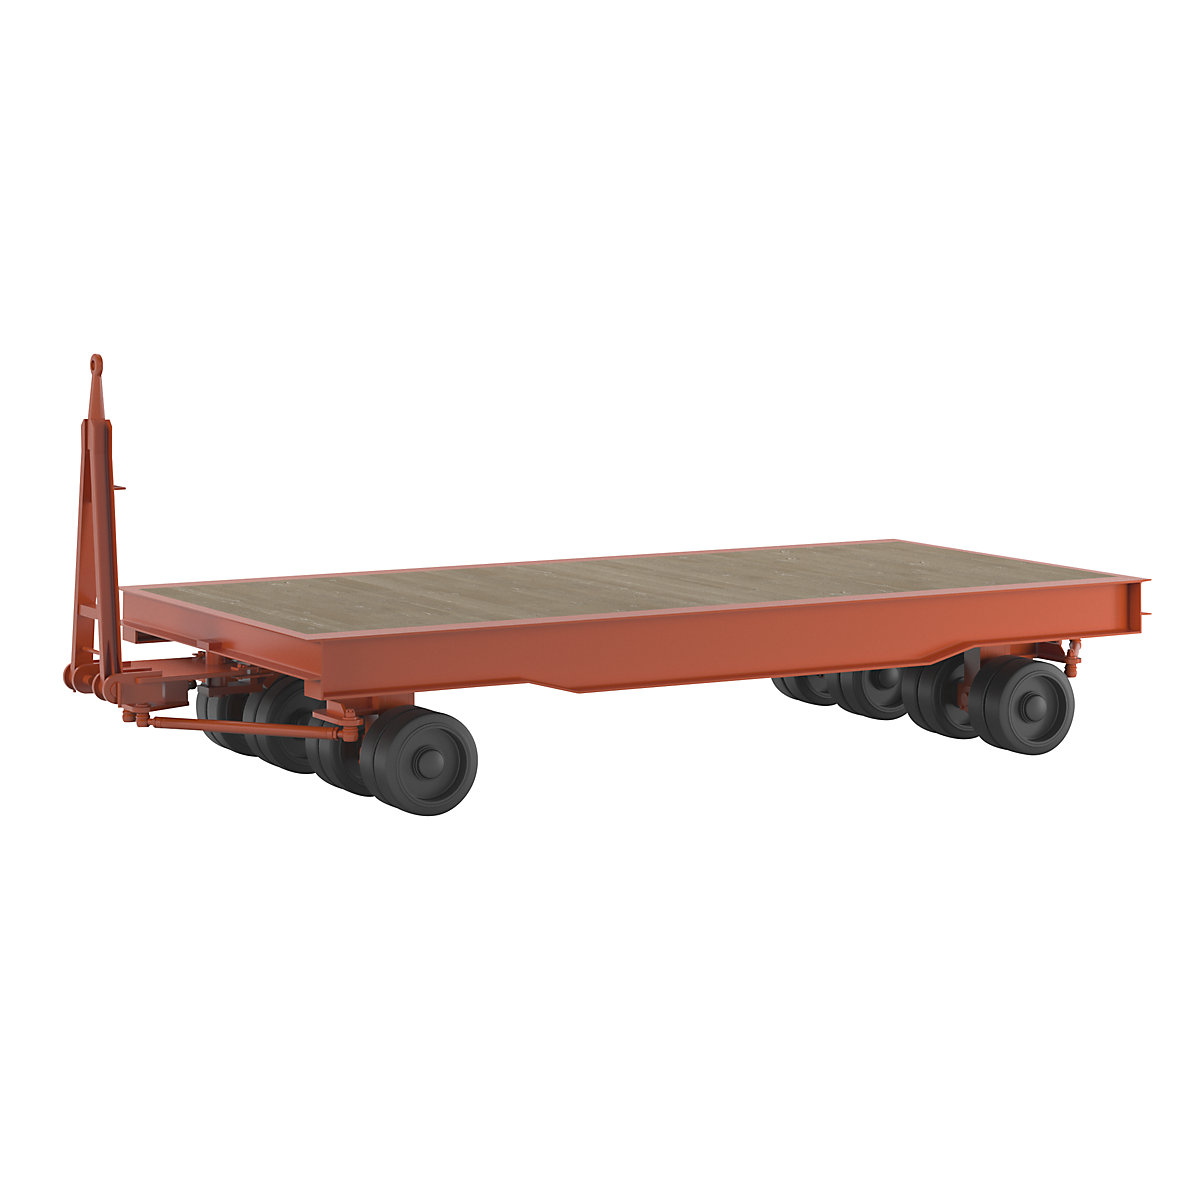 Heavy goods trailer, 25 t, 4-wheel linked Ackermann steering, platform 4.0 x 2.0 m-1